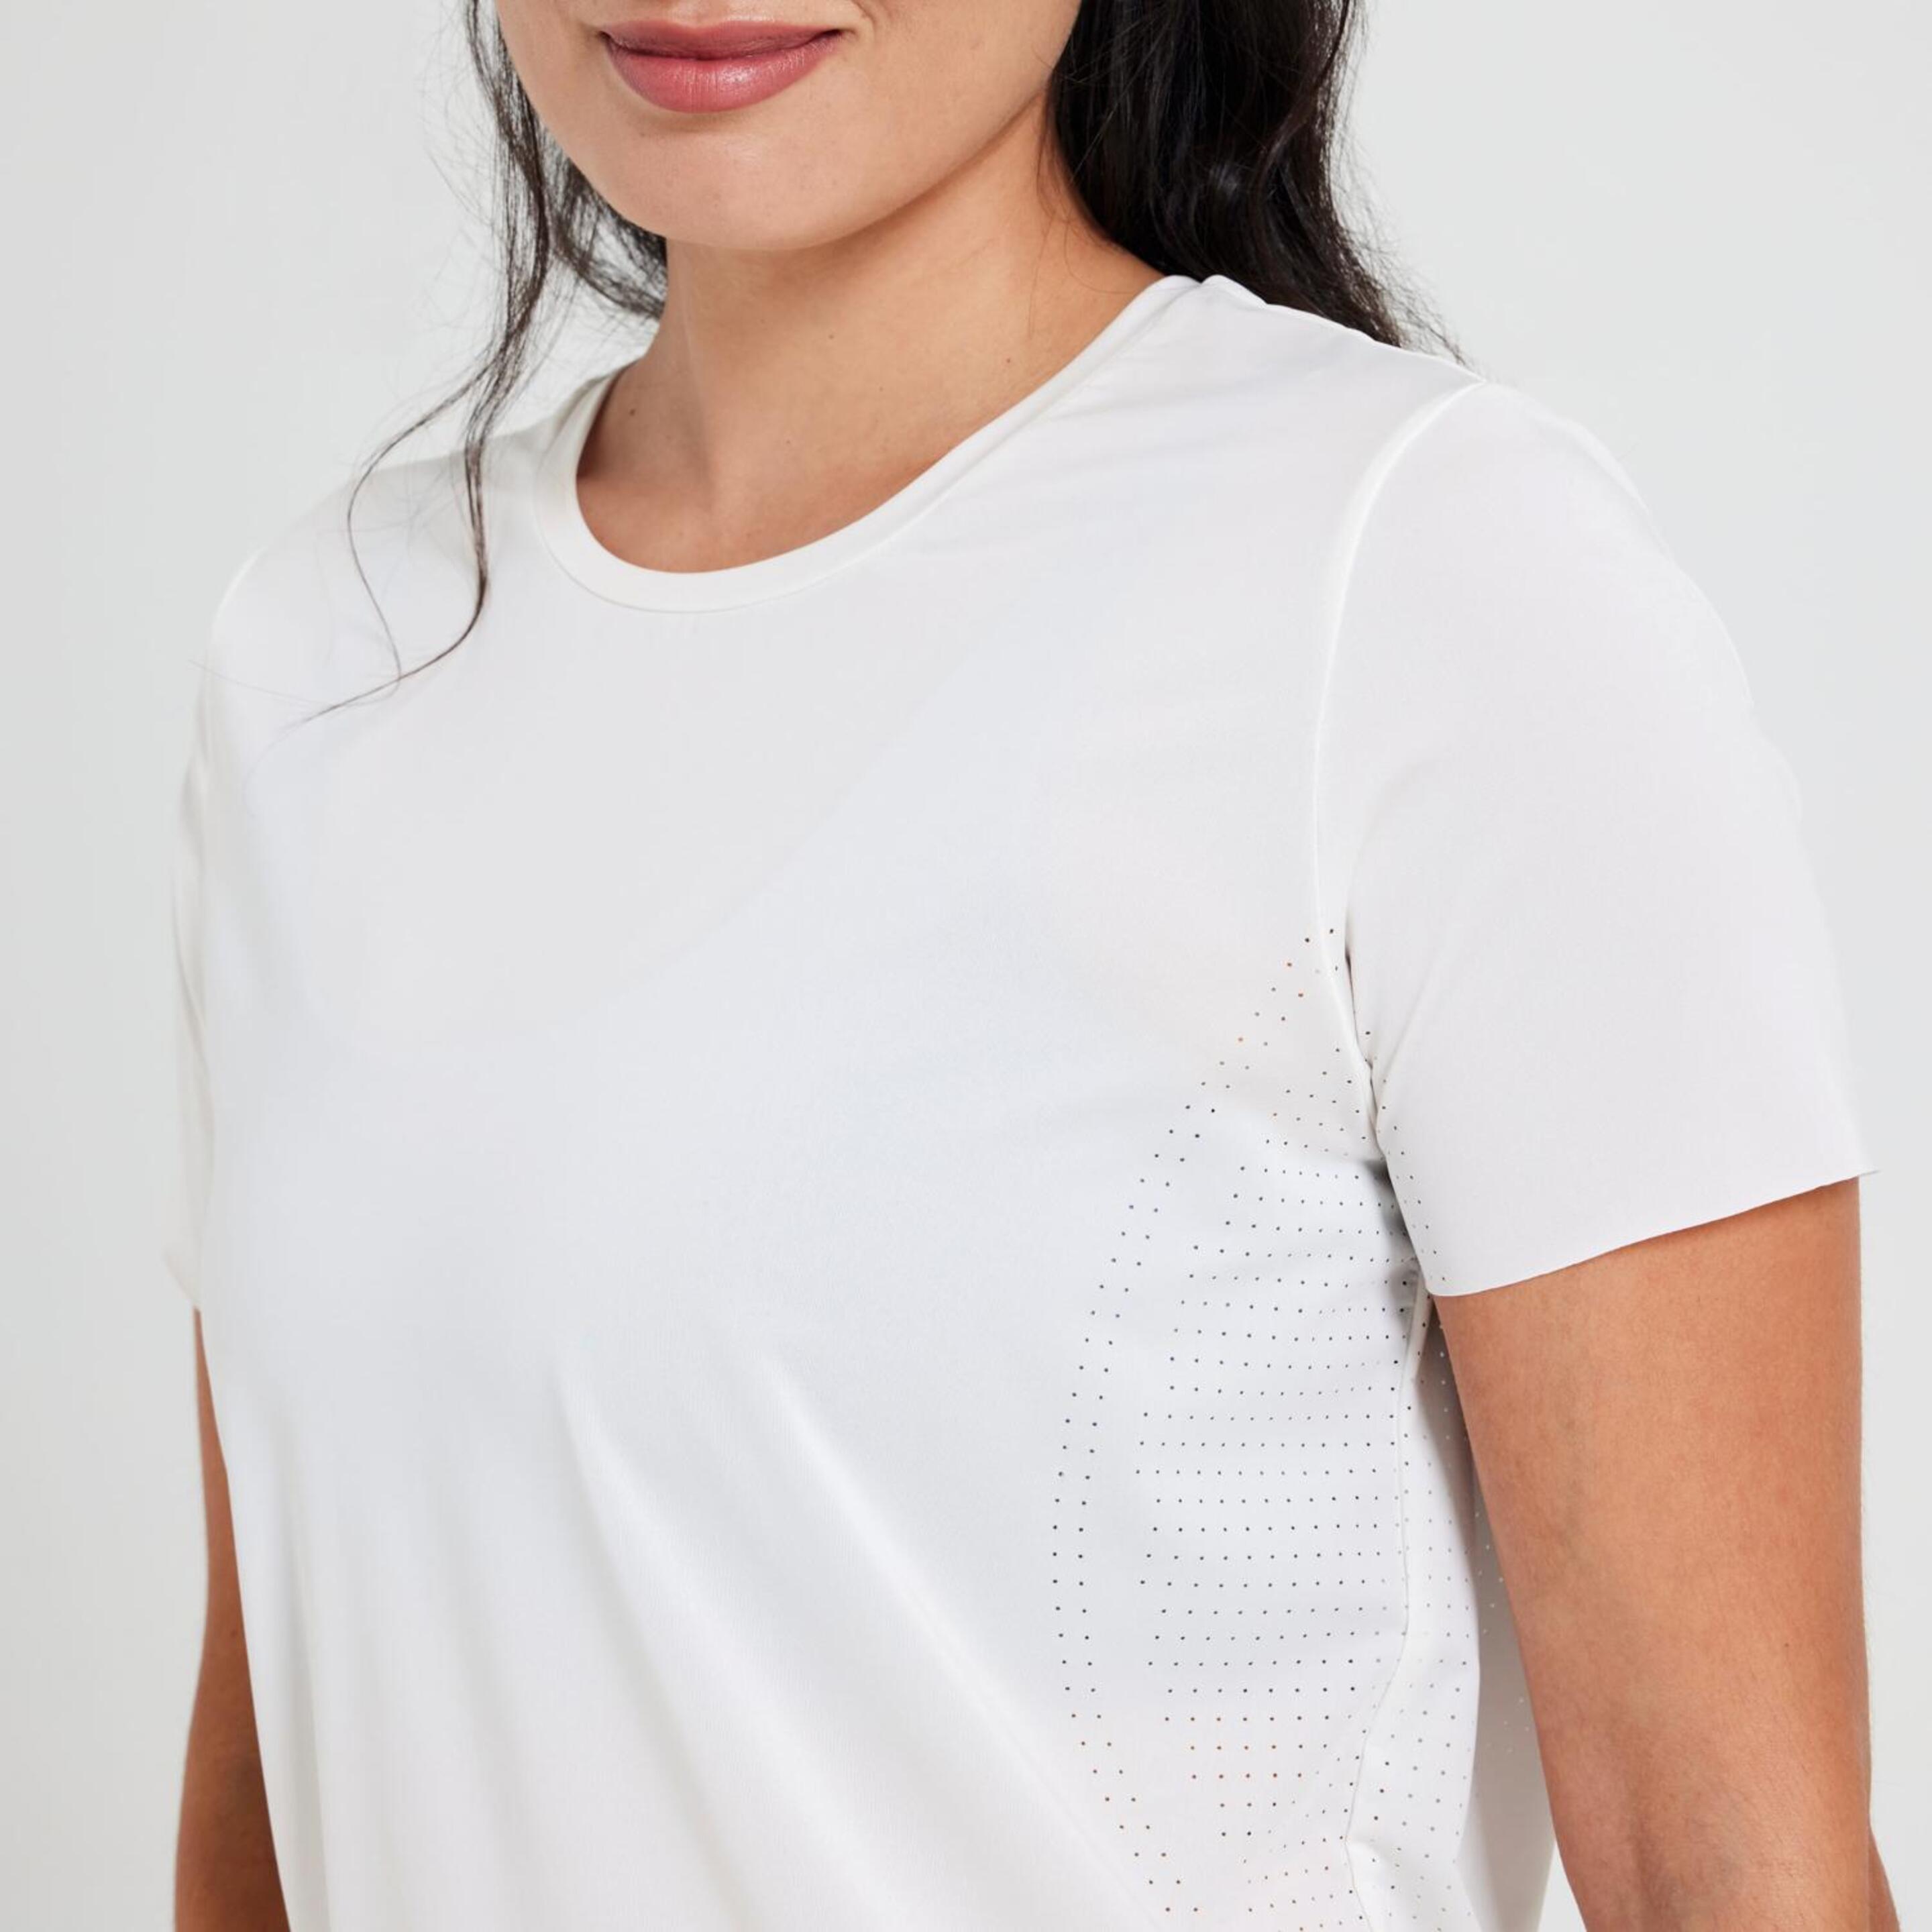 Doone Casual Luxe - Blanco - Camiseta Mujer